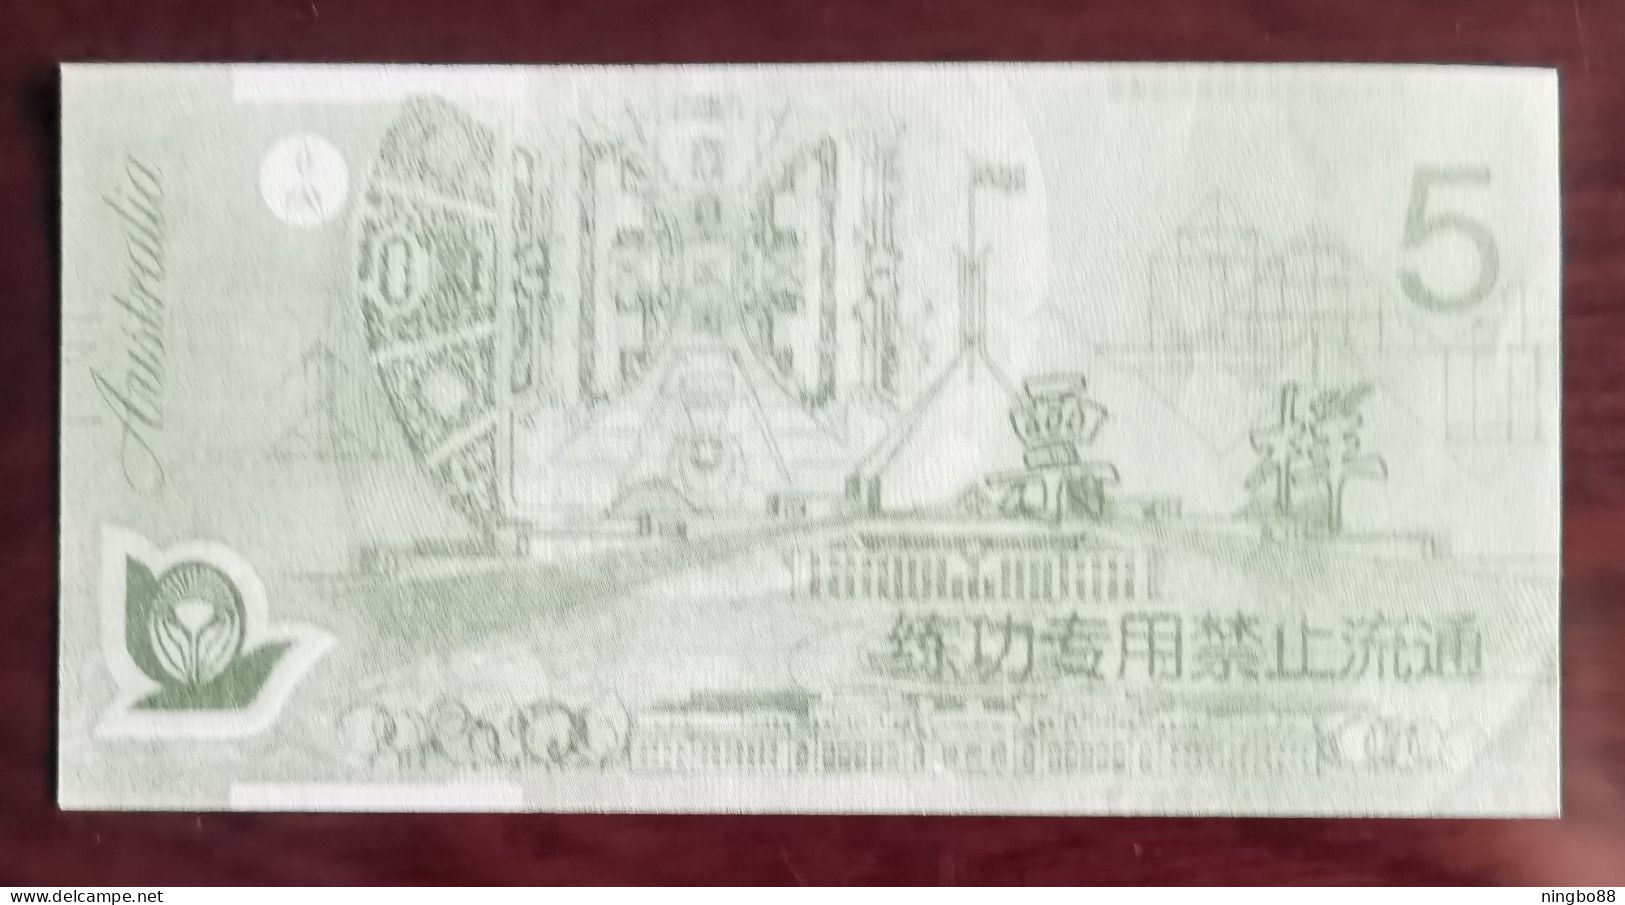 China BOC Bank (bank Of China) Training/test Banknote,AUSTRALIA B-2 Series 5 Dollars Note Specimen Overprint - Fakes & Specimens